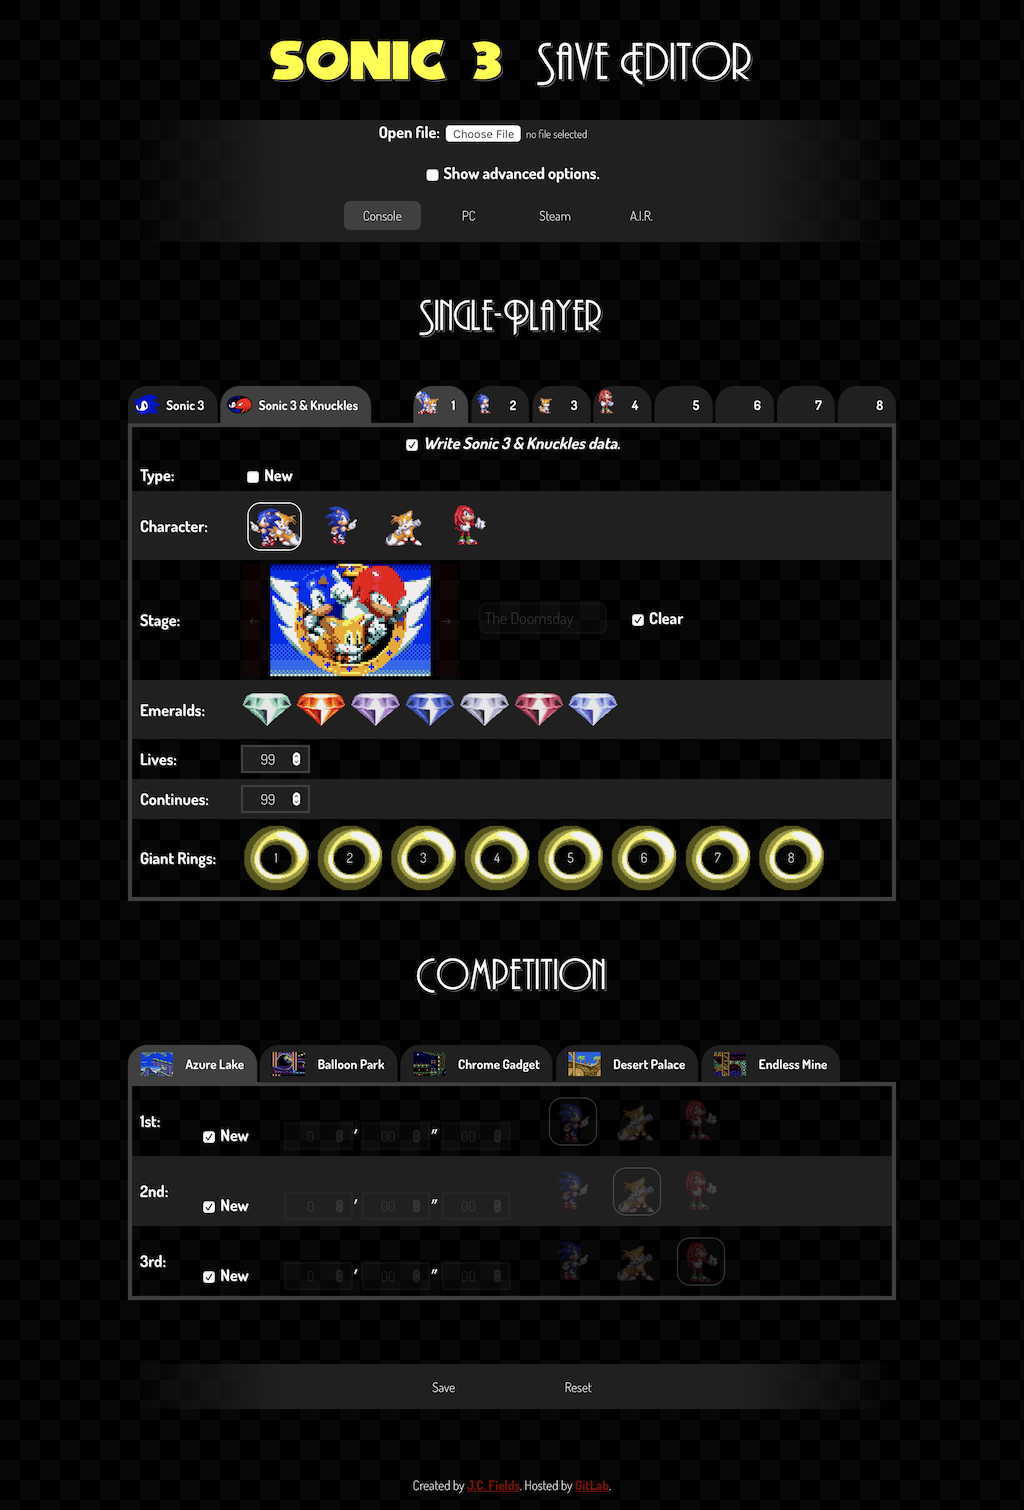 Sonic 3 Save Editor